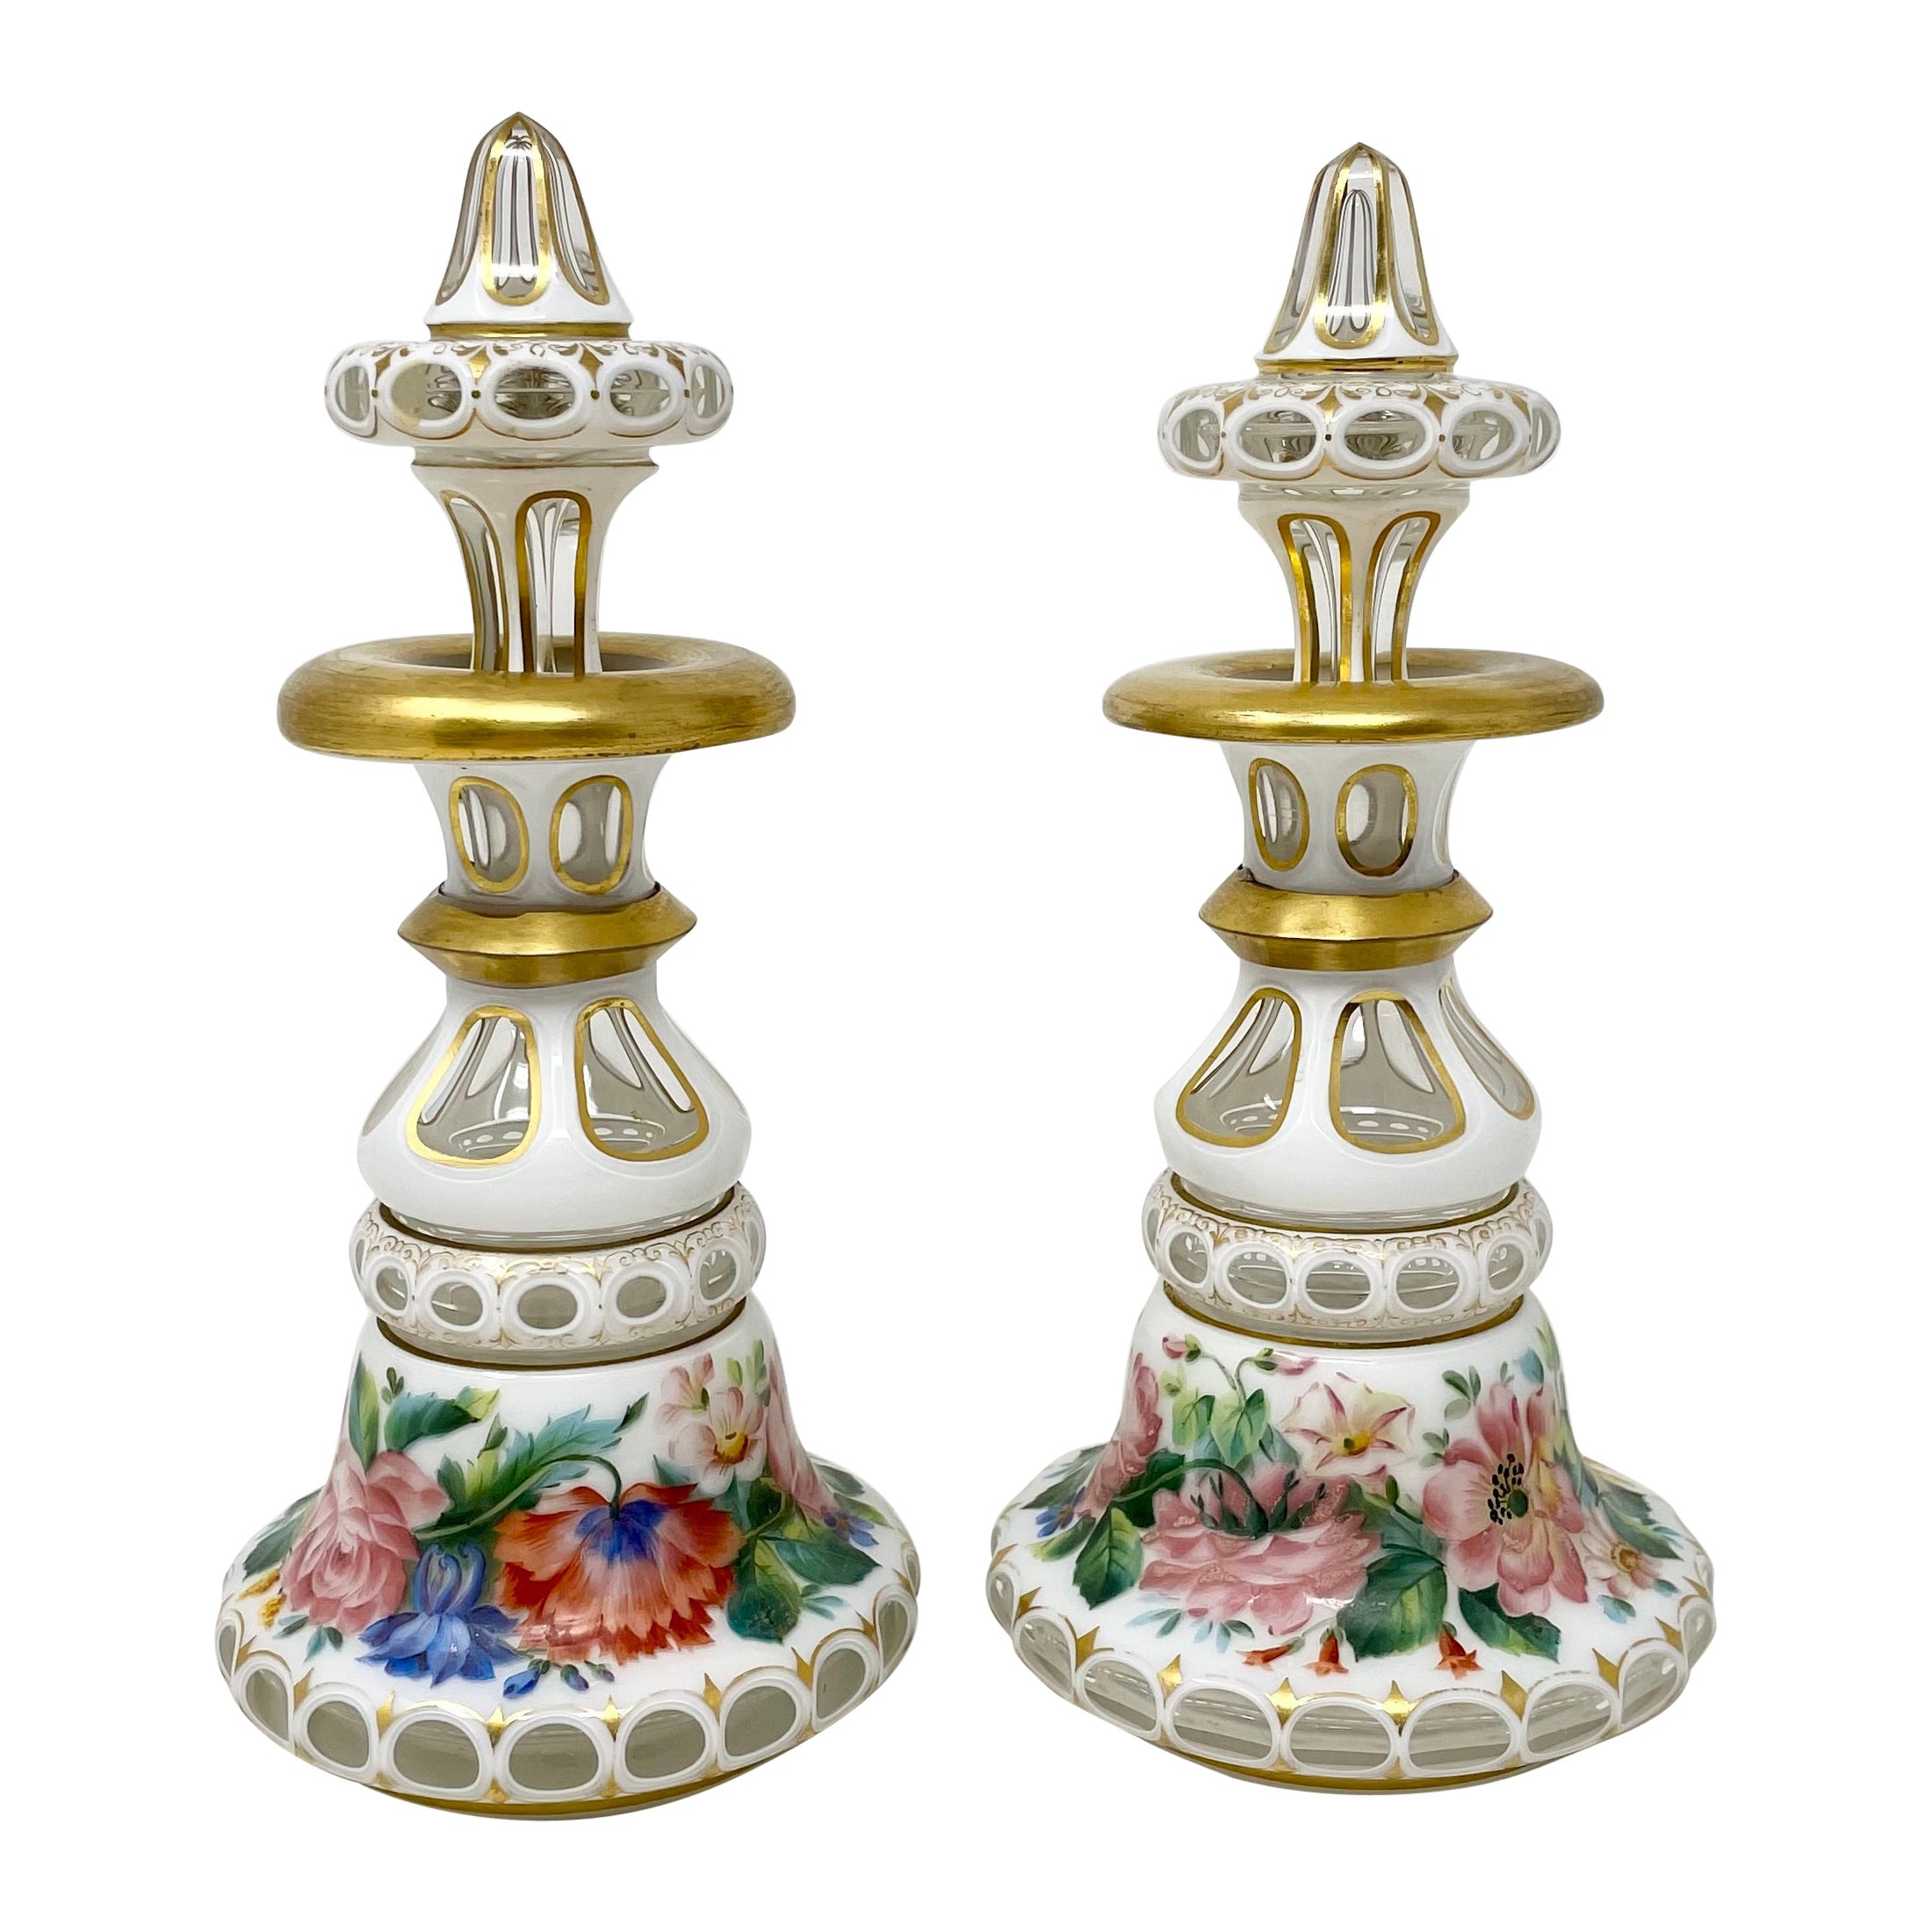 Paire de parfums anciens en opaline, vers 1860-1870